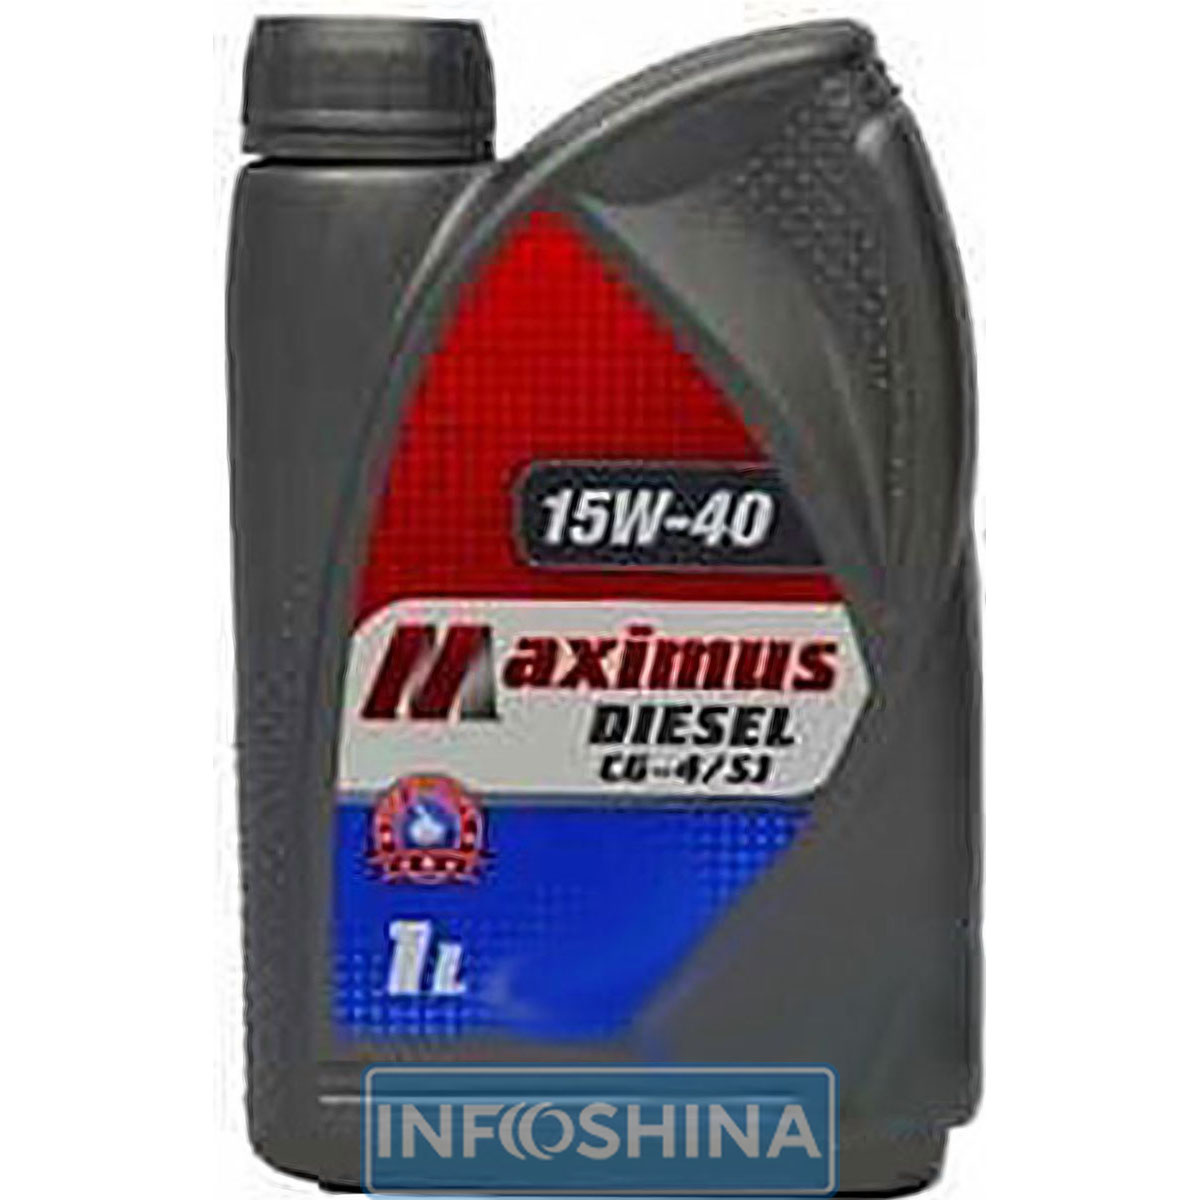 Maximus Diesel CG-4/SJ 15W-40